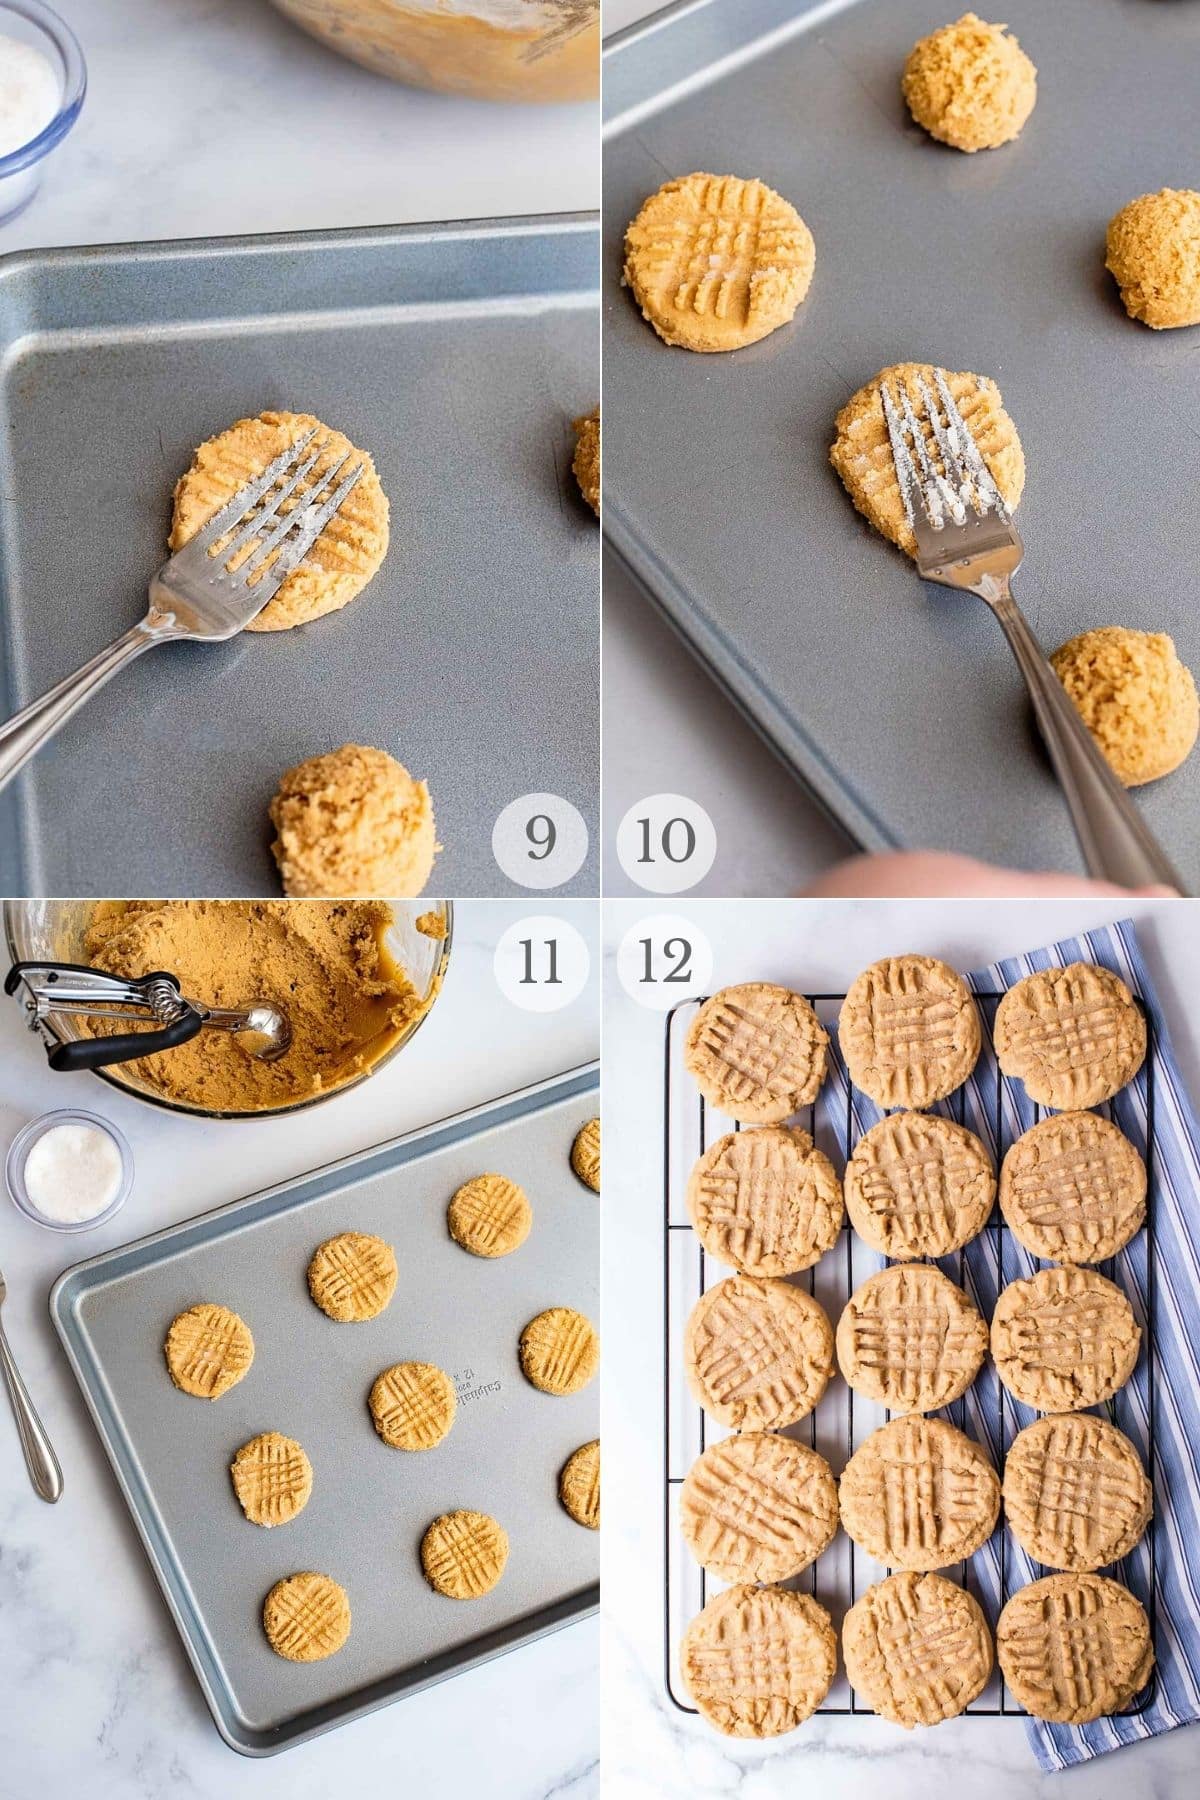 peanut butter cookies recipe steps 9-12